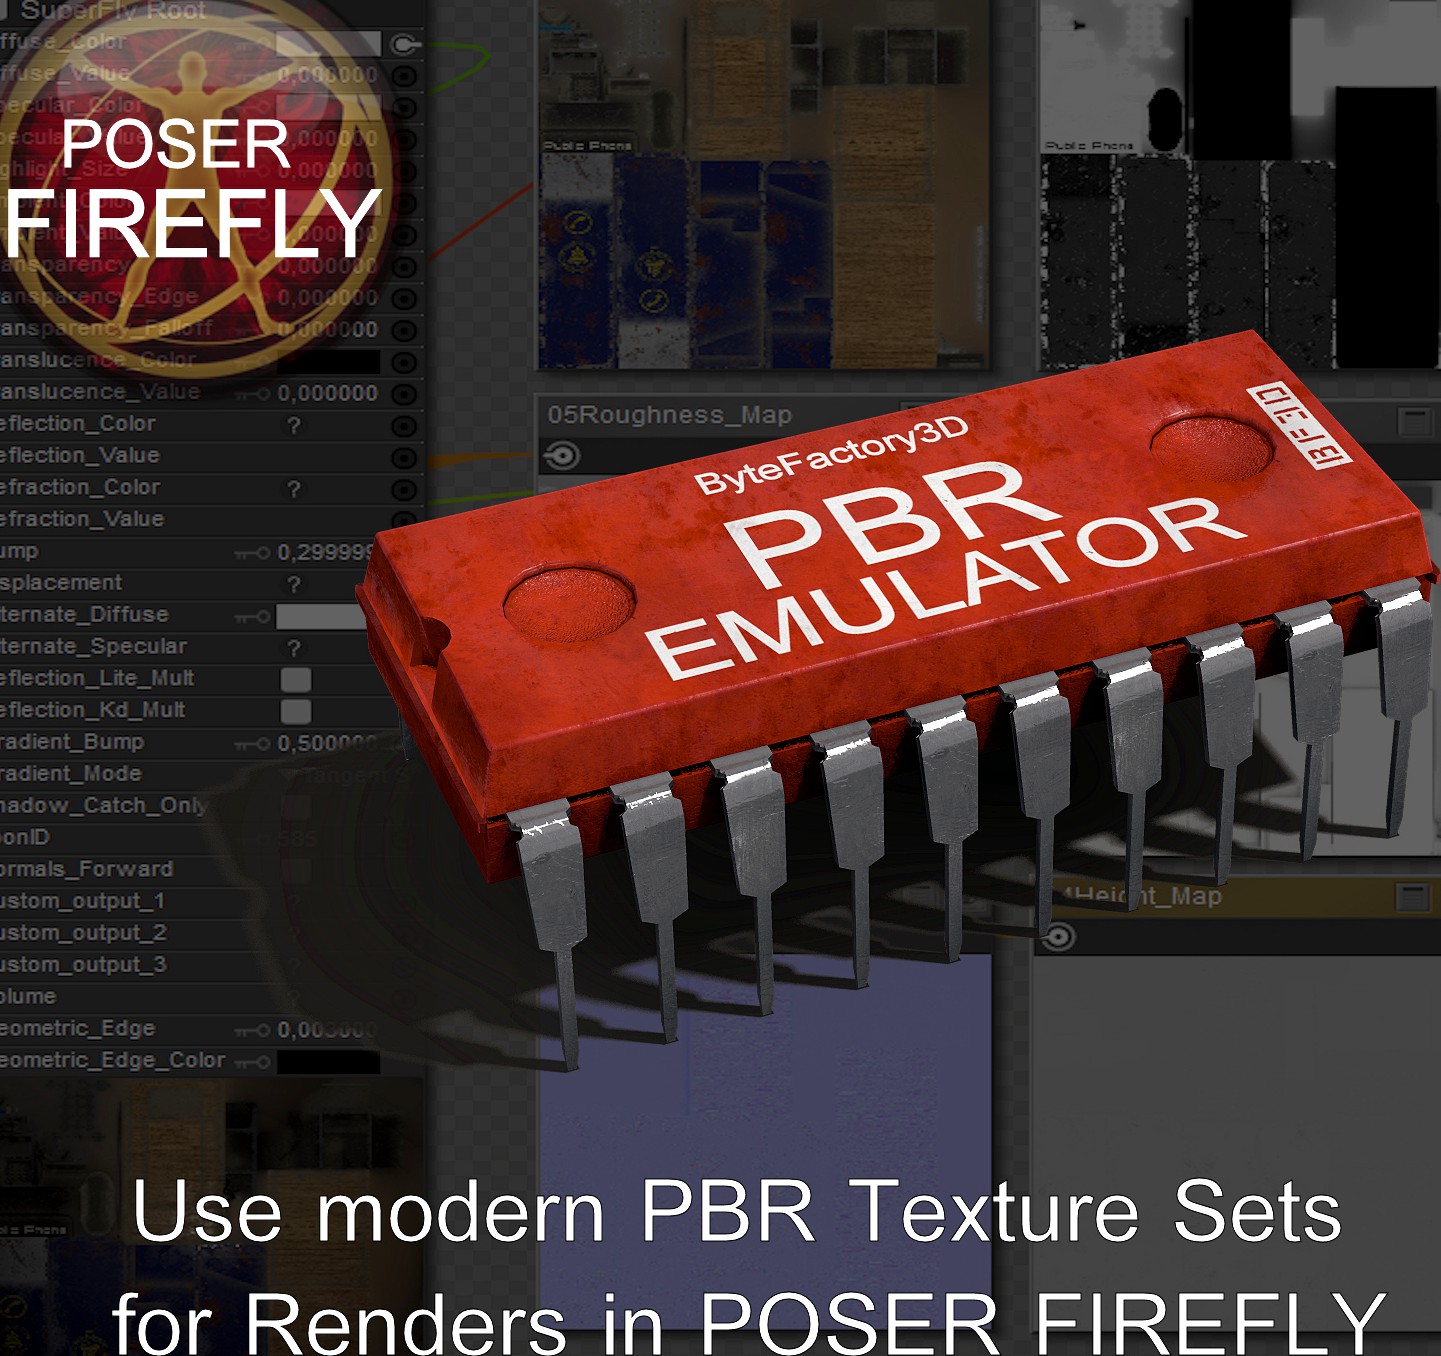 PBR-Emulator FIREFLY - Extended License Merchant Resource